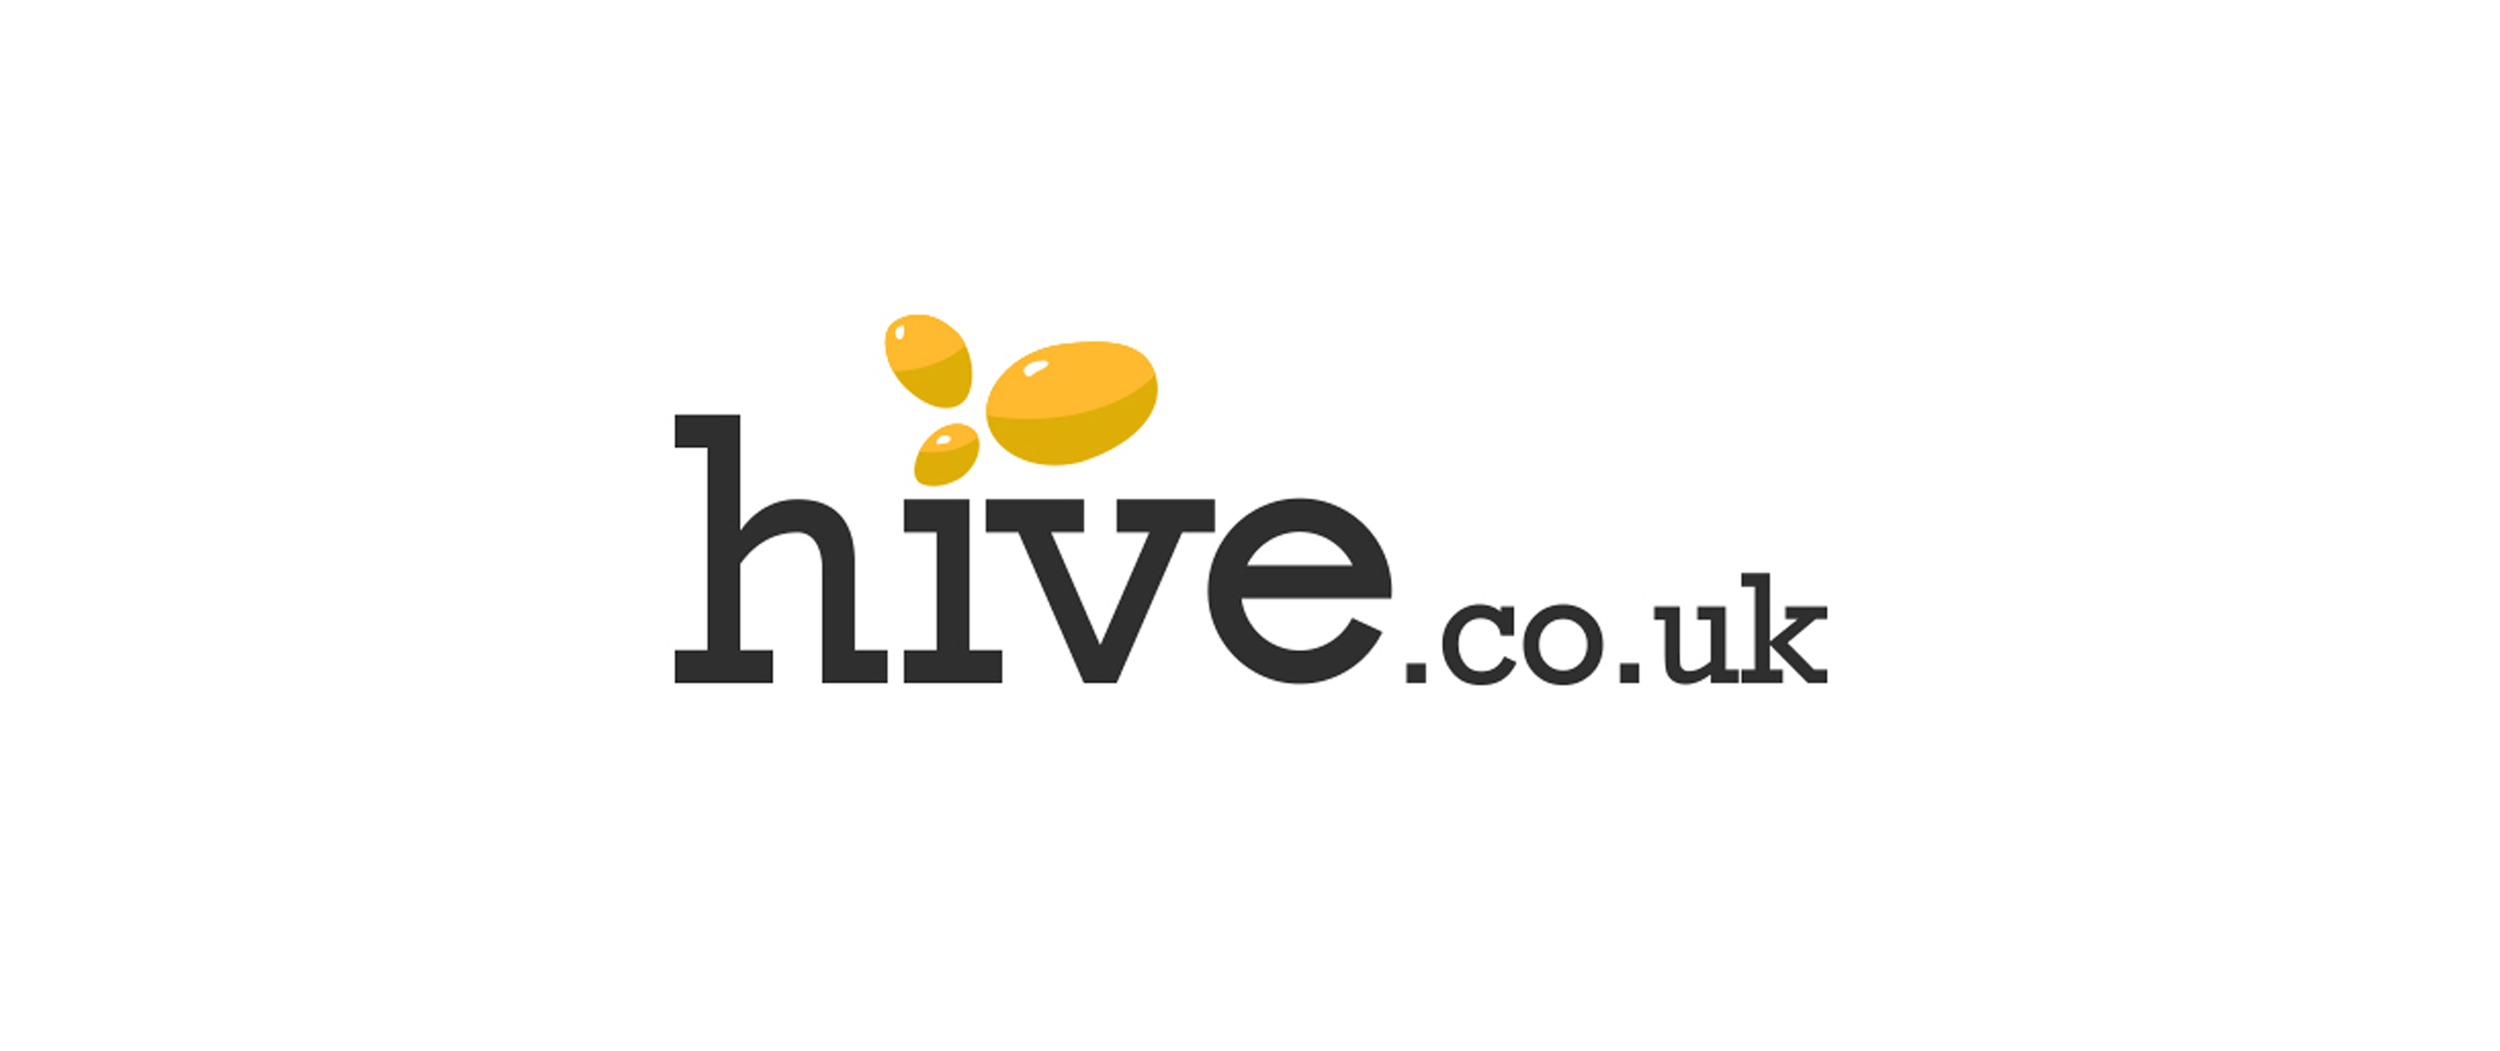 Hive co uk Logo Buy Books.png